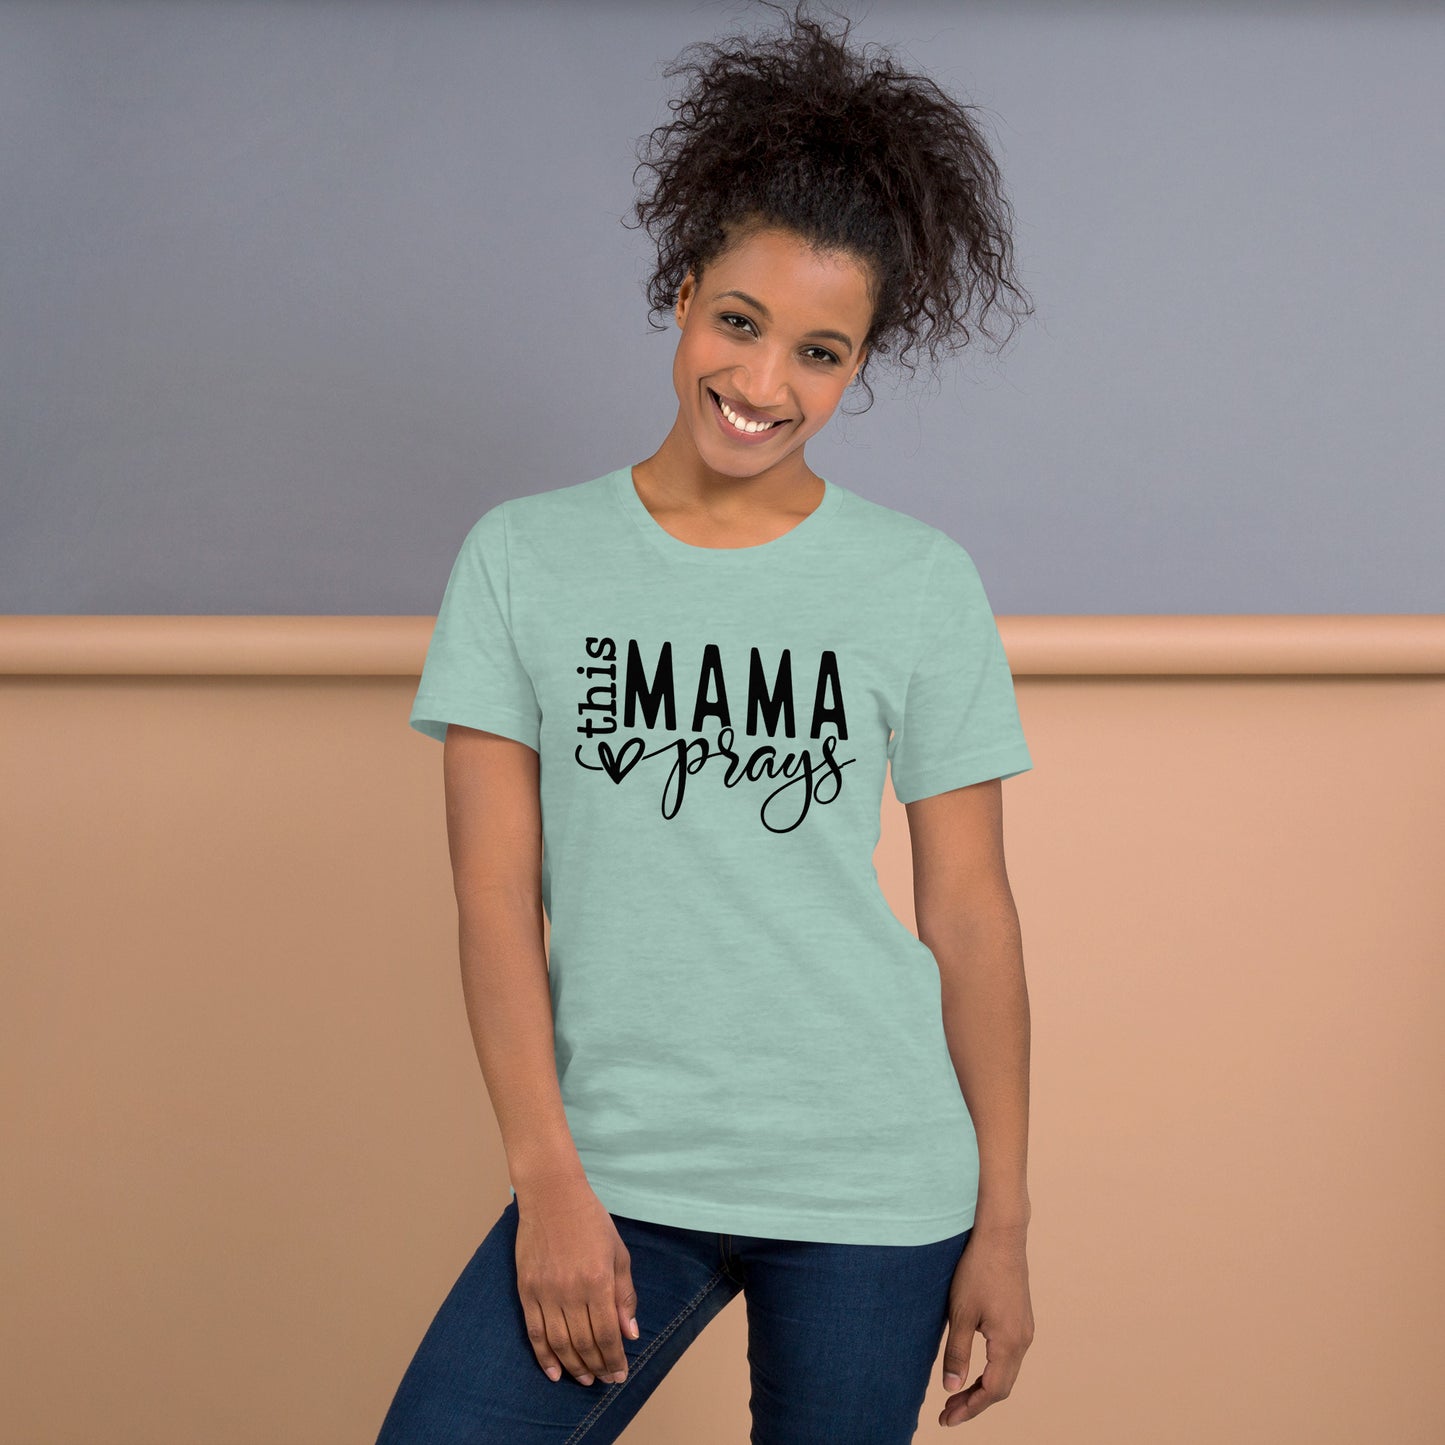 This Mama Prays Short Sleeve T-Shirt